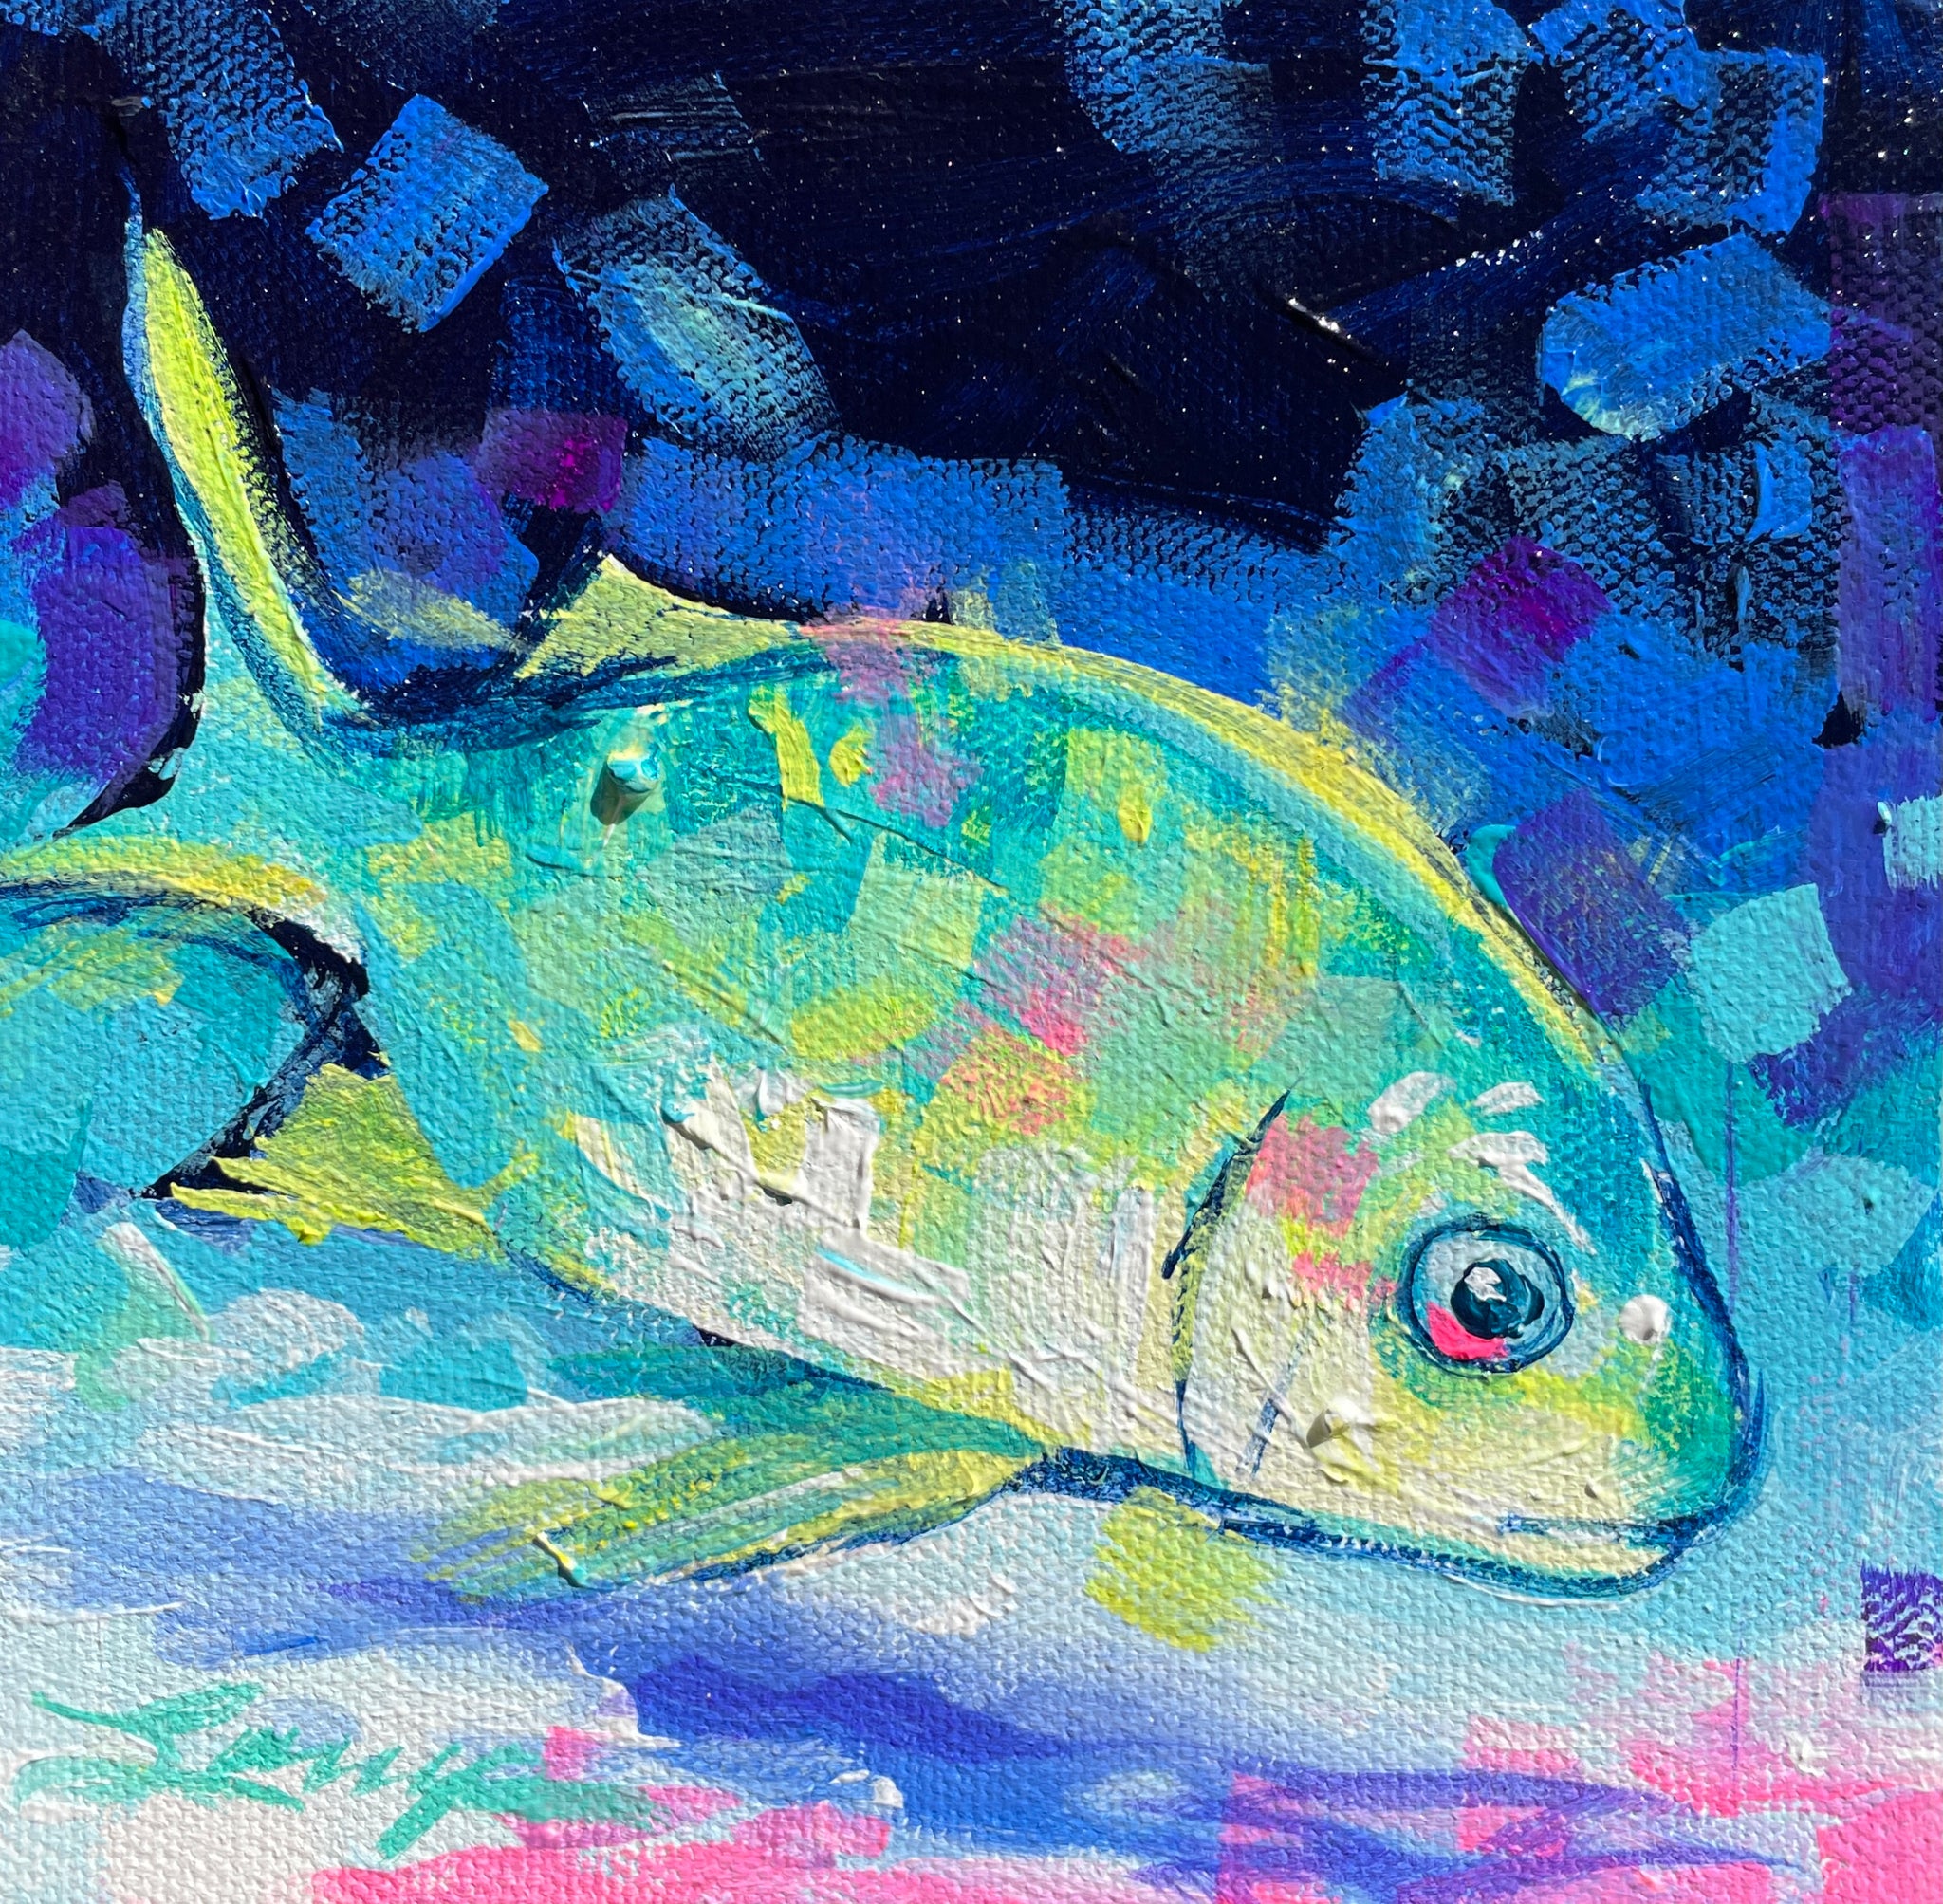 "Daily" Pigfish 1